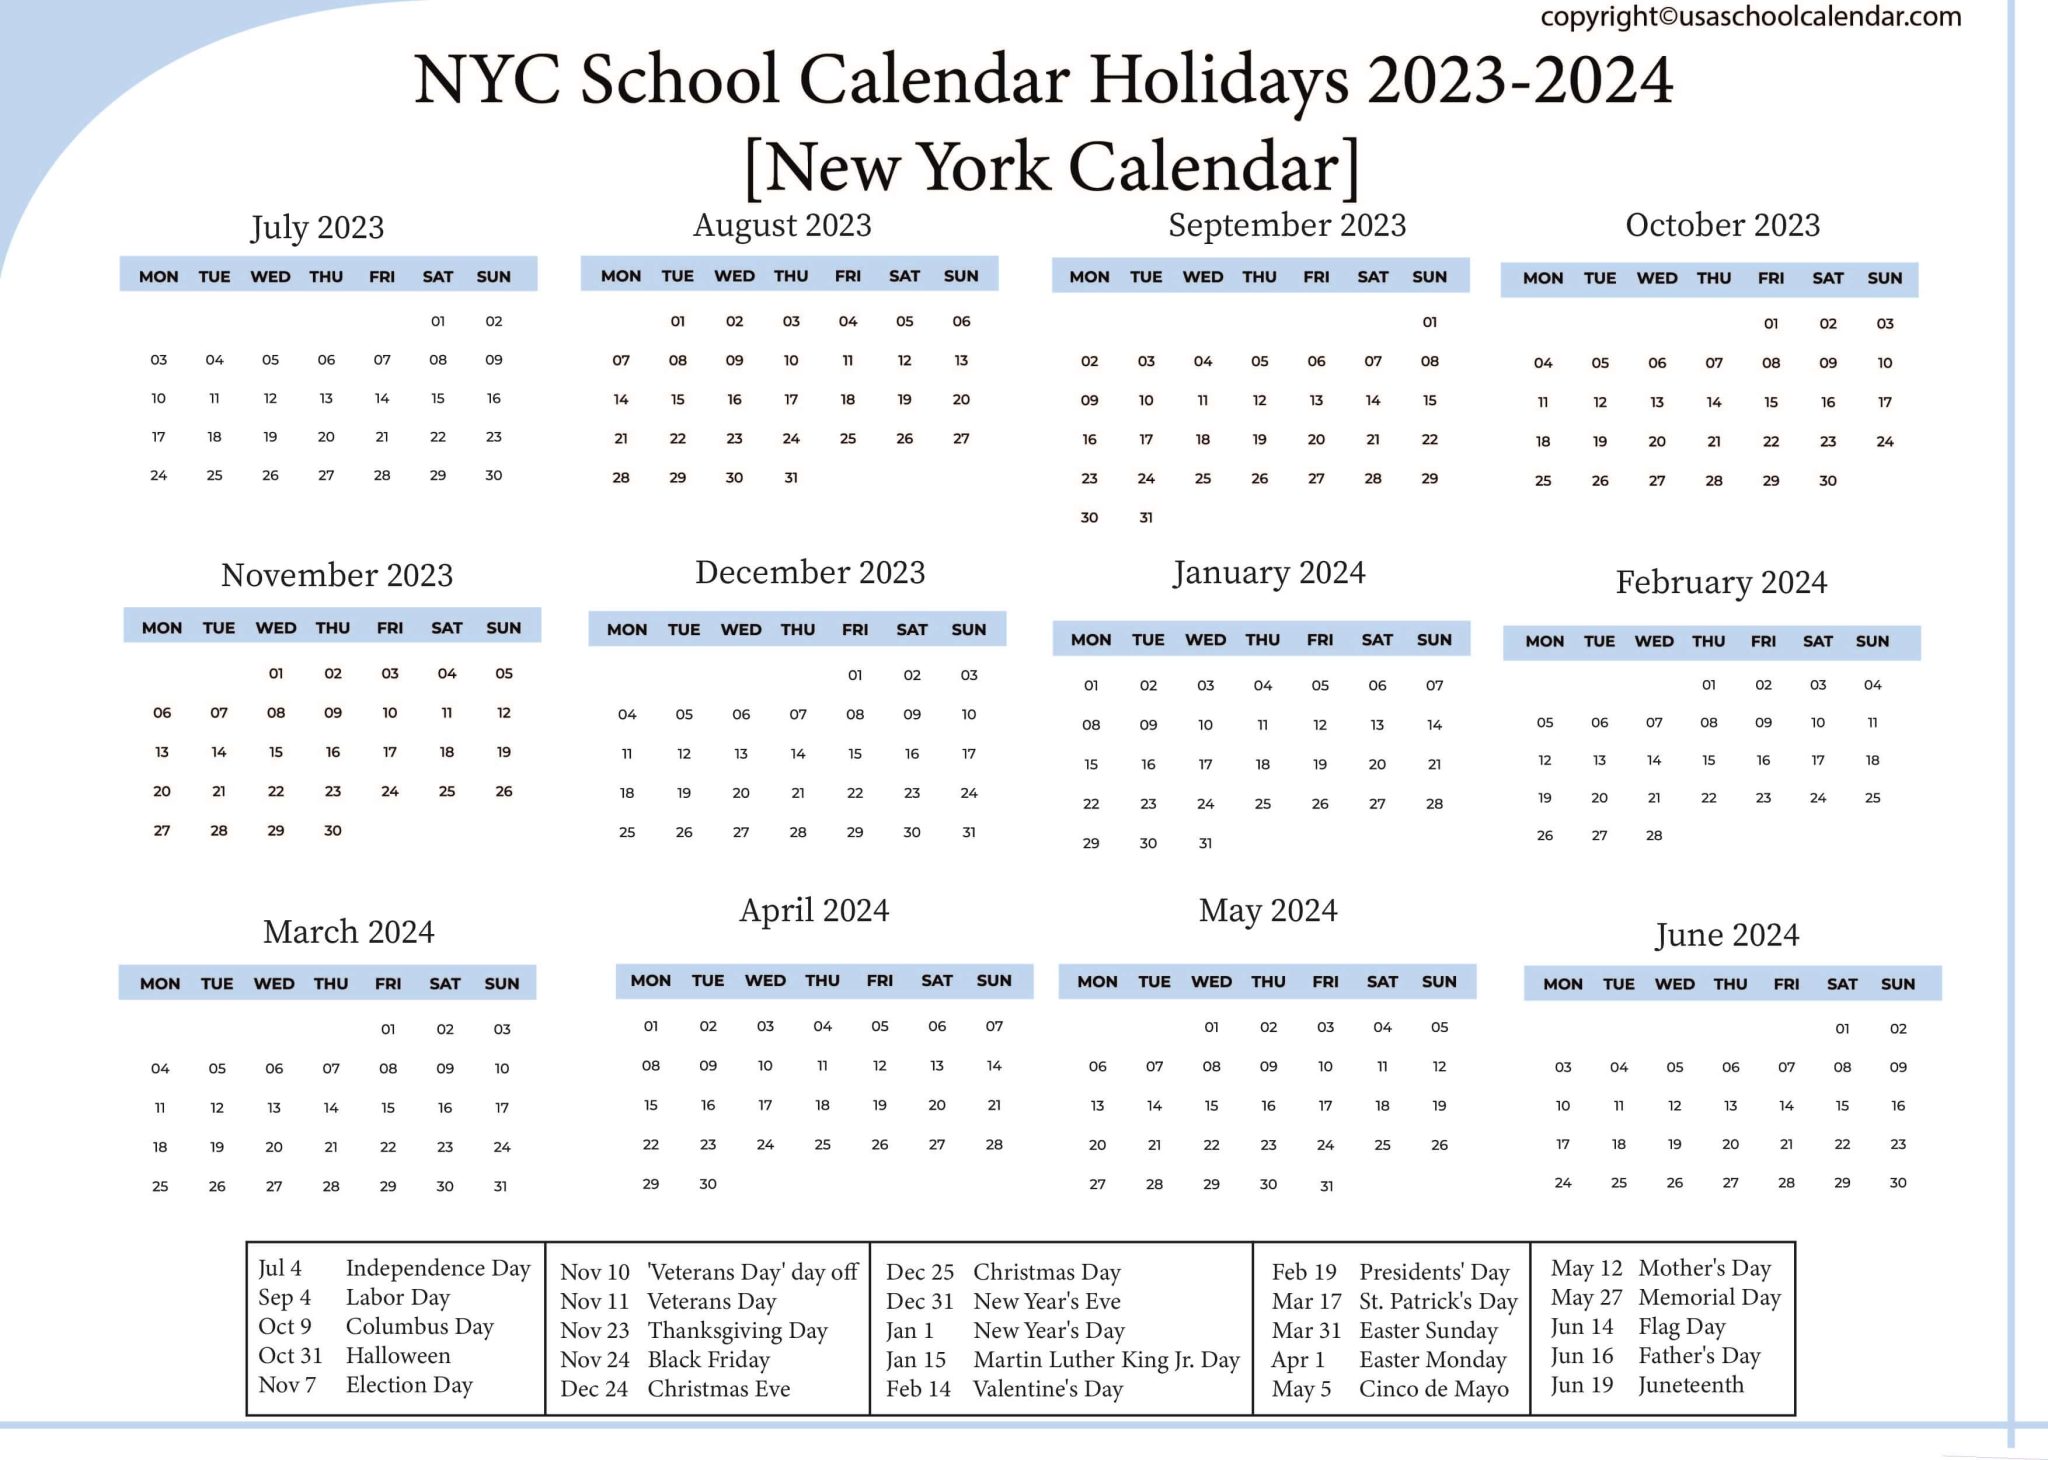 NYC School Calendar Holidays 2023 2024 New York Calendar 2048x1460 